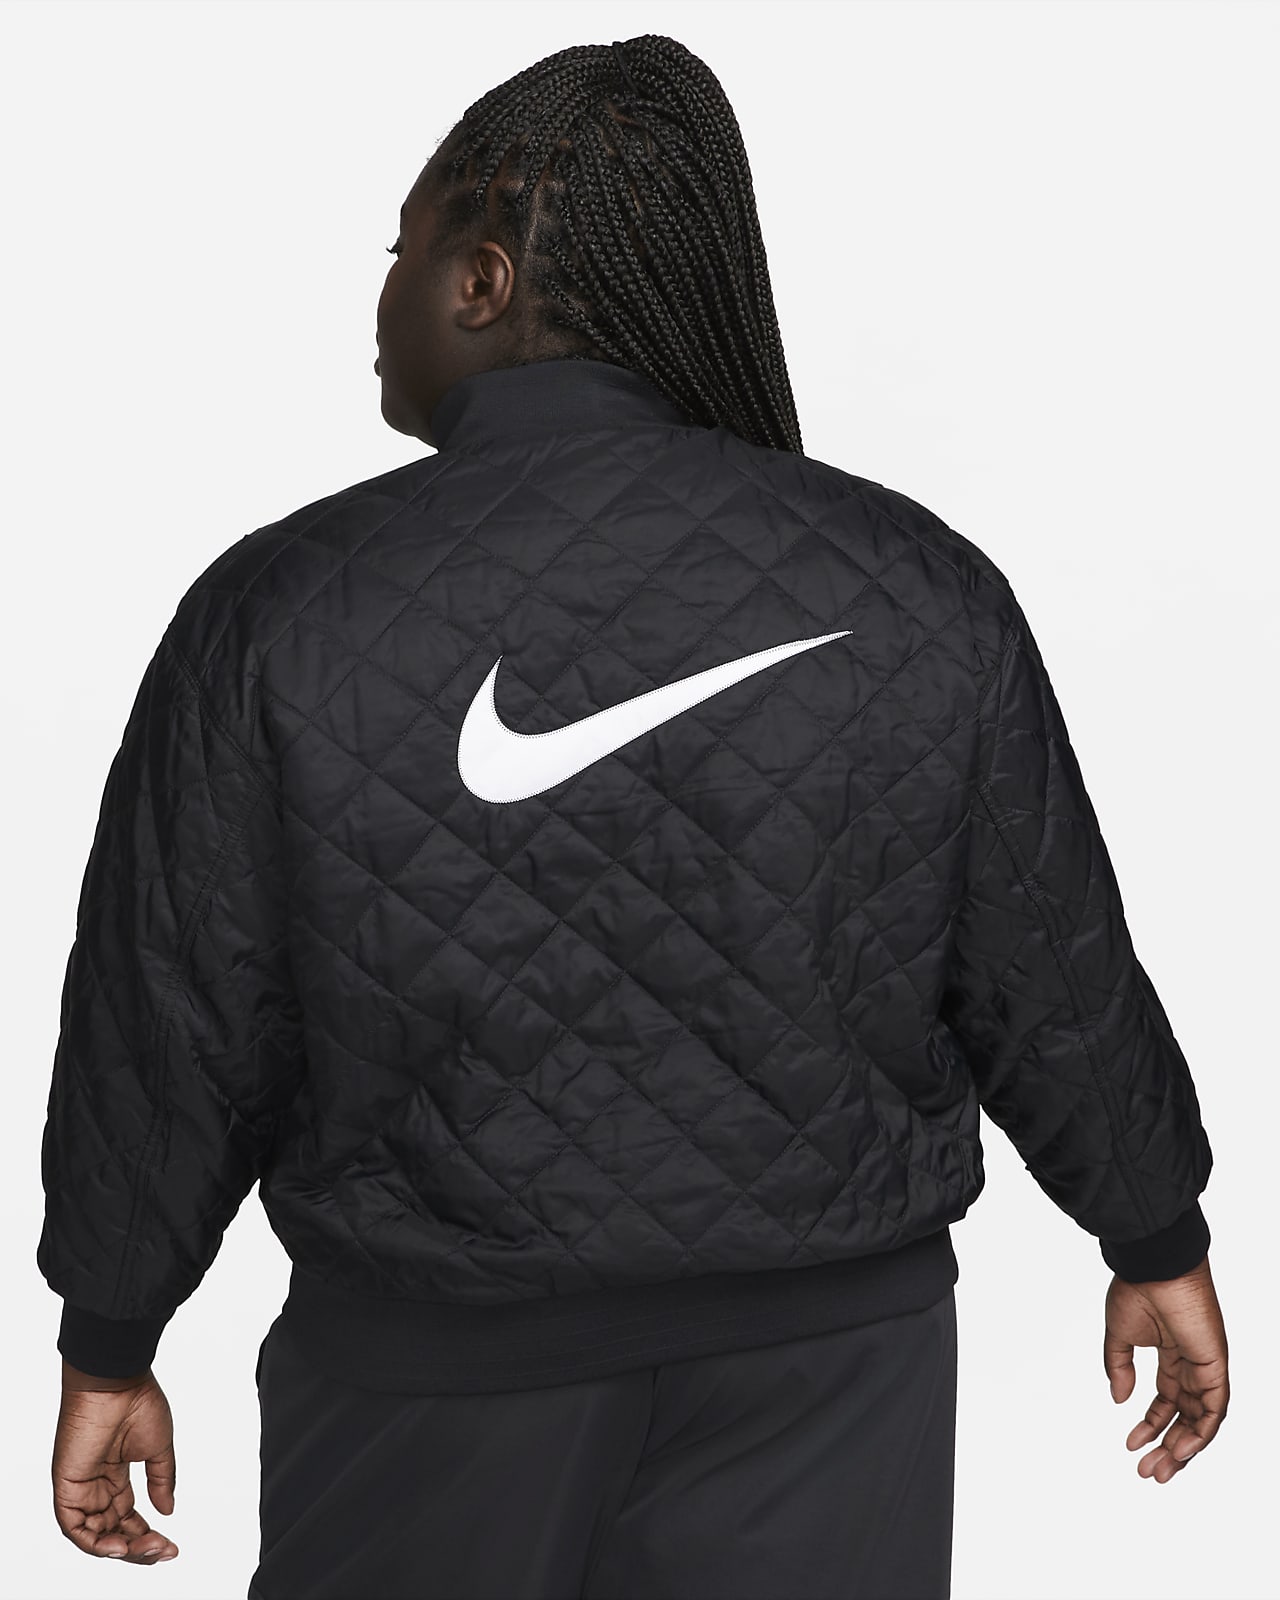 Nike AIR Varsity Jacket - Men's Basketball Jacket